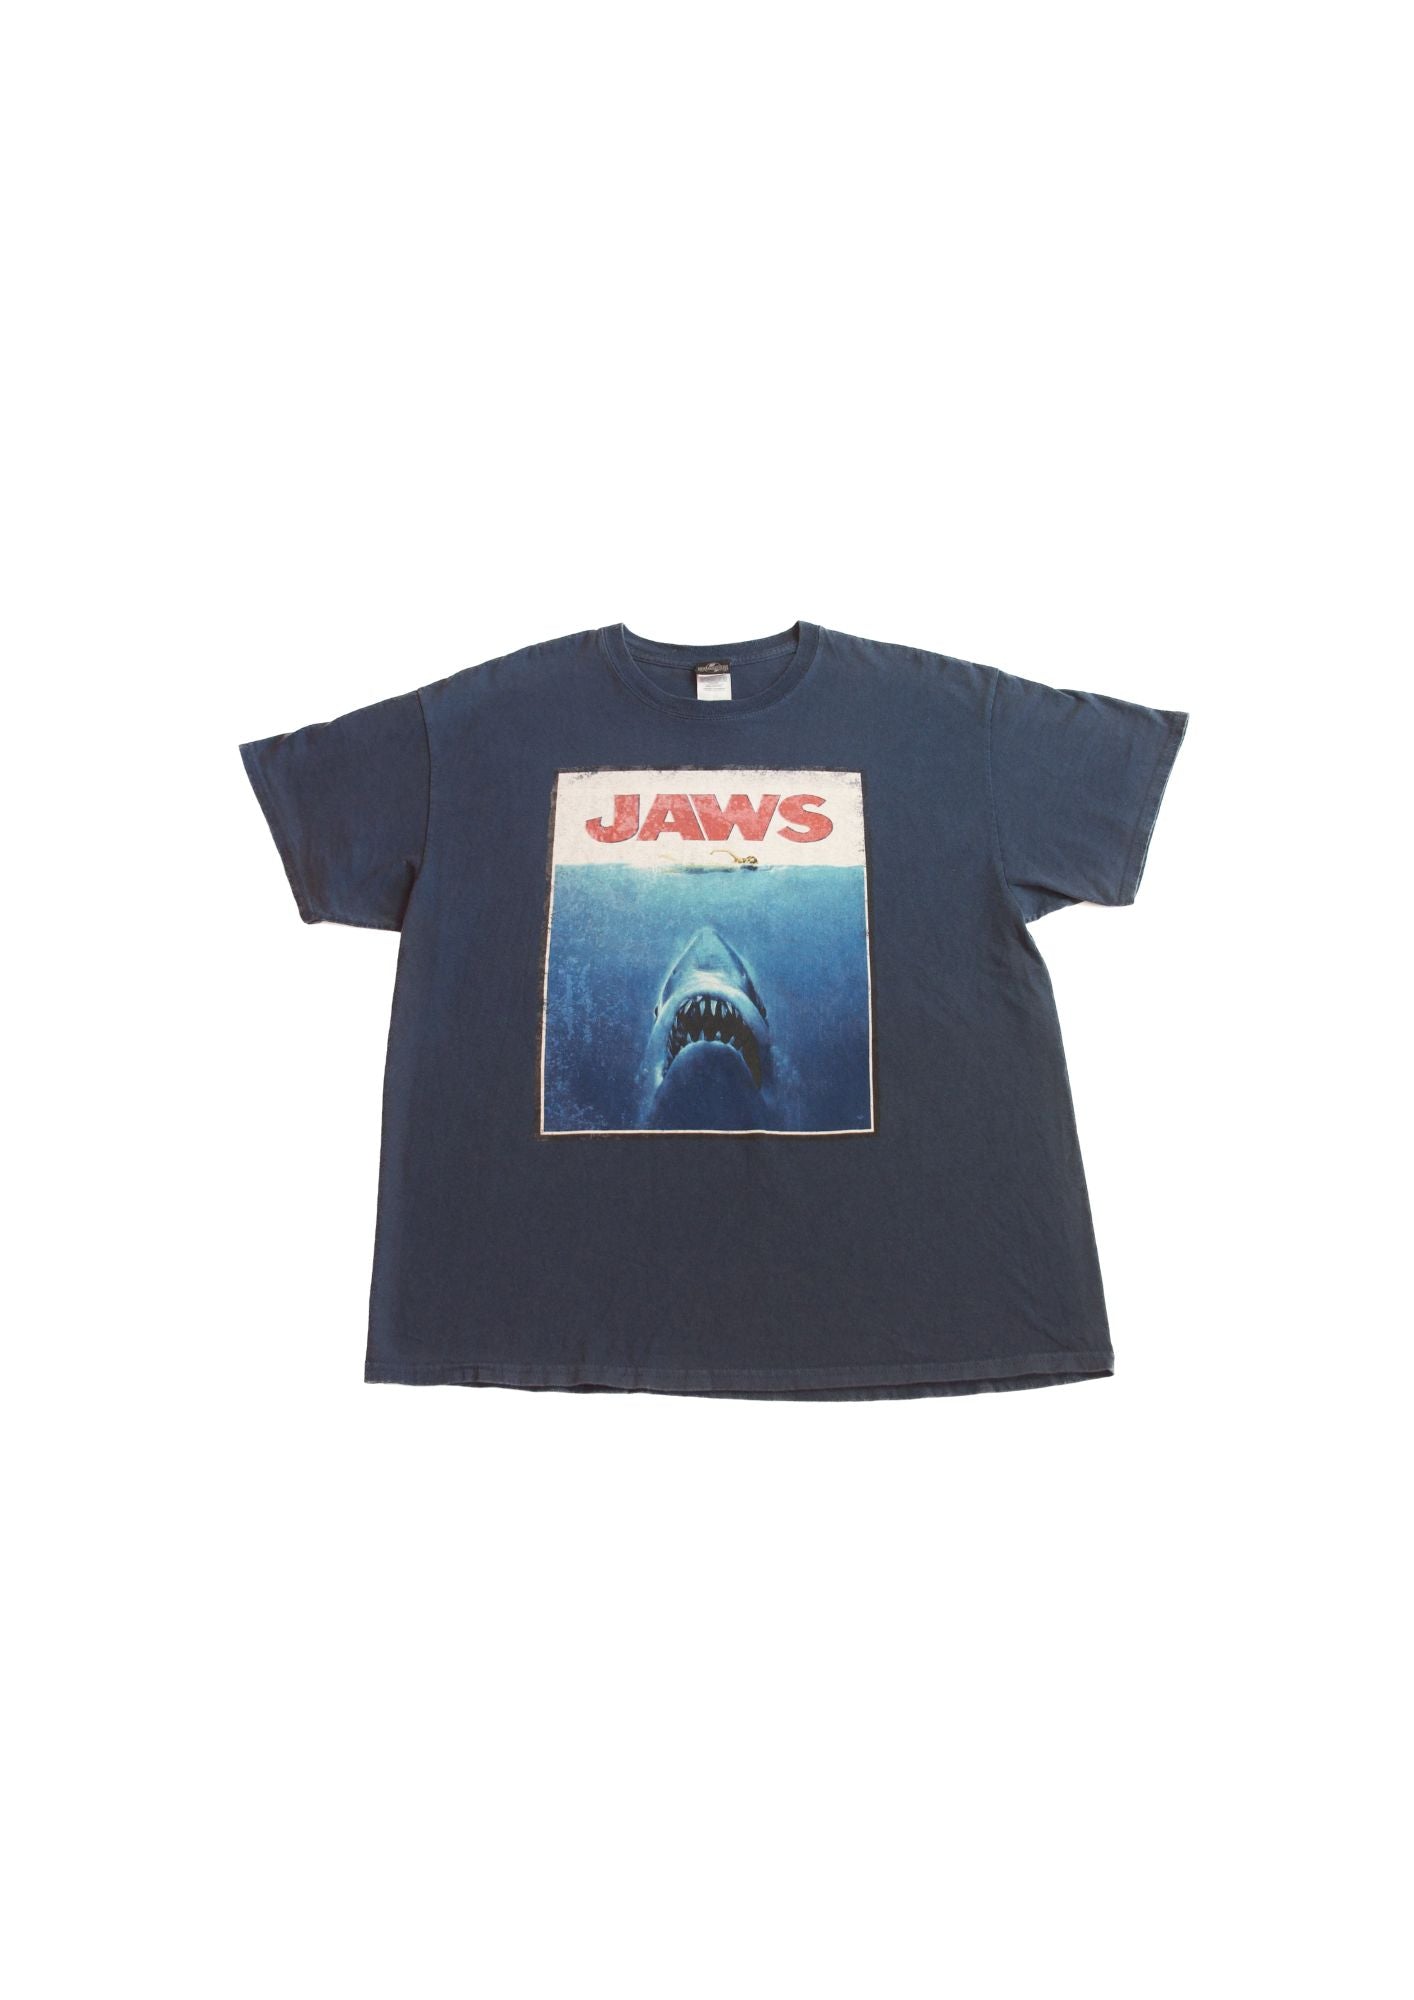 T-shirt Jaws Universal Studios 1